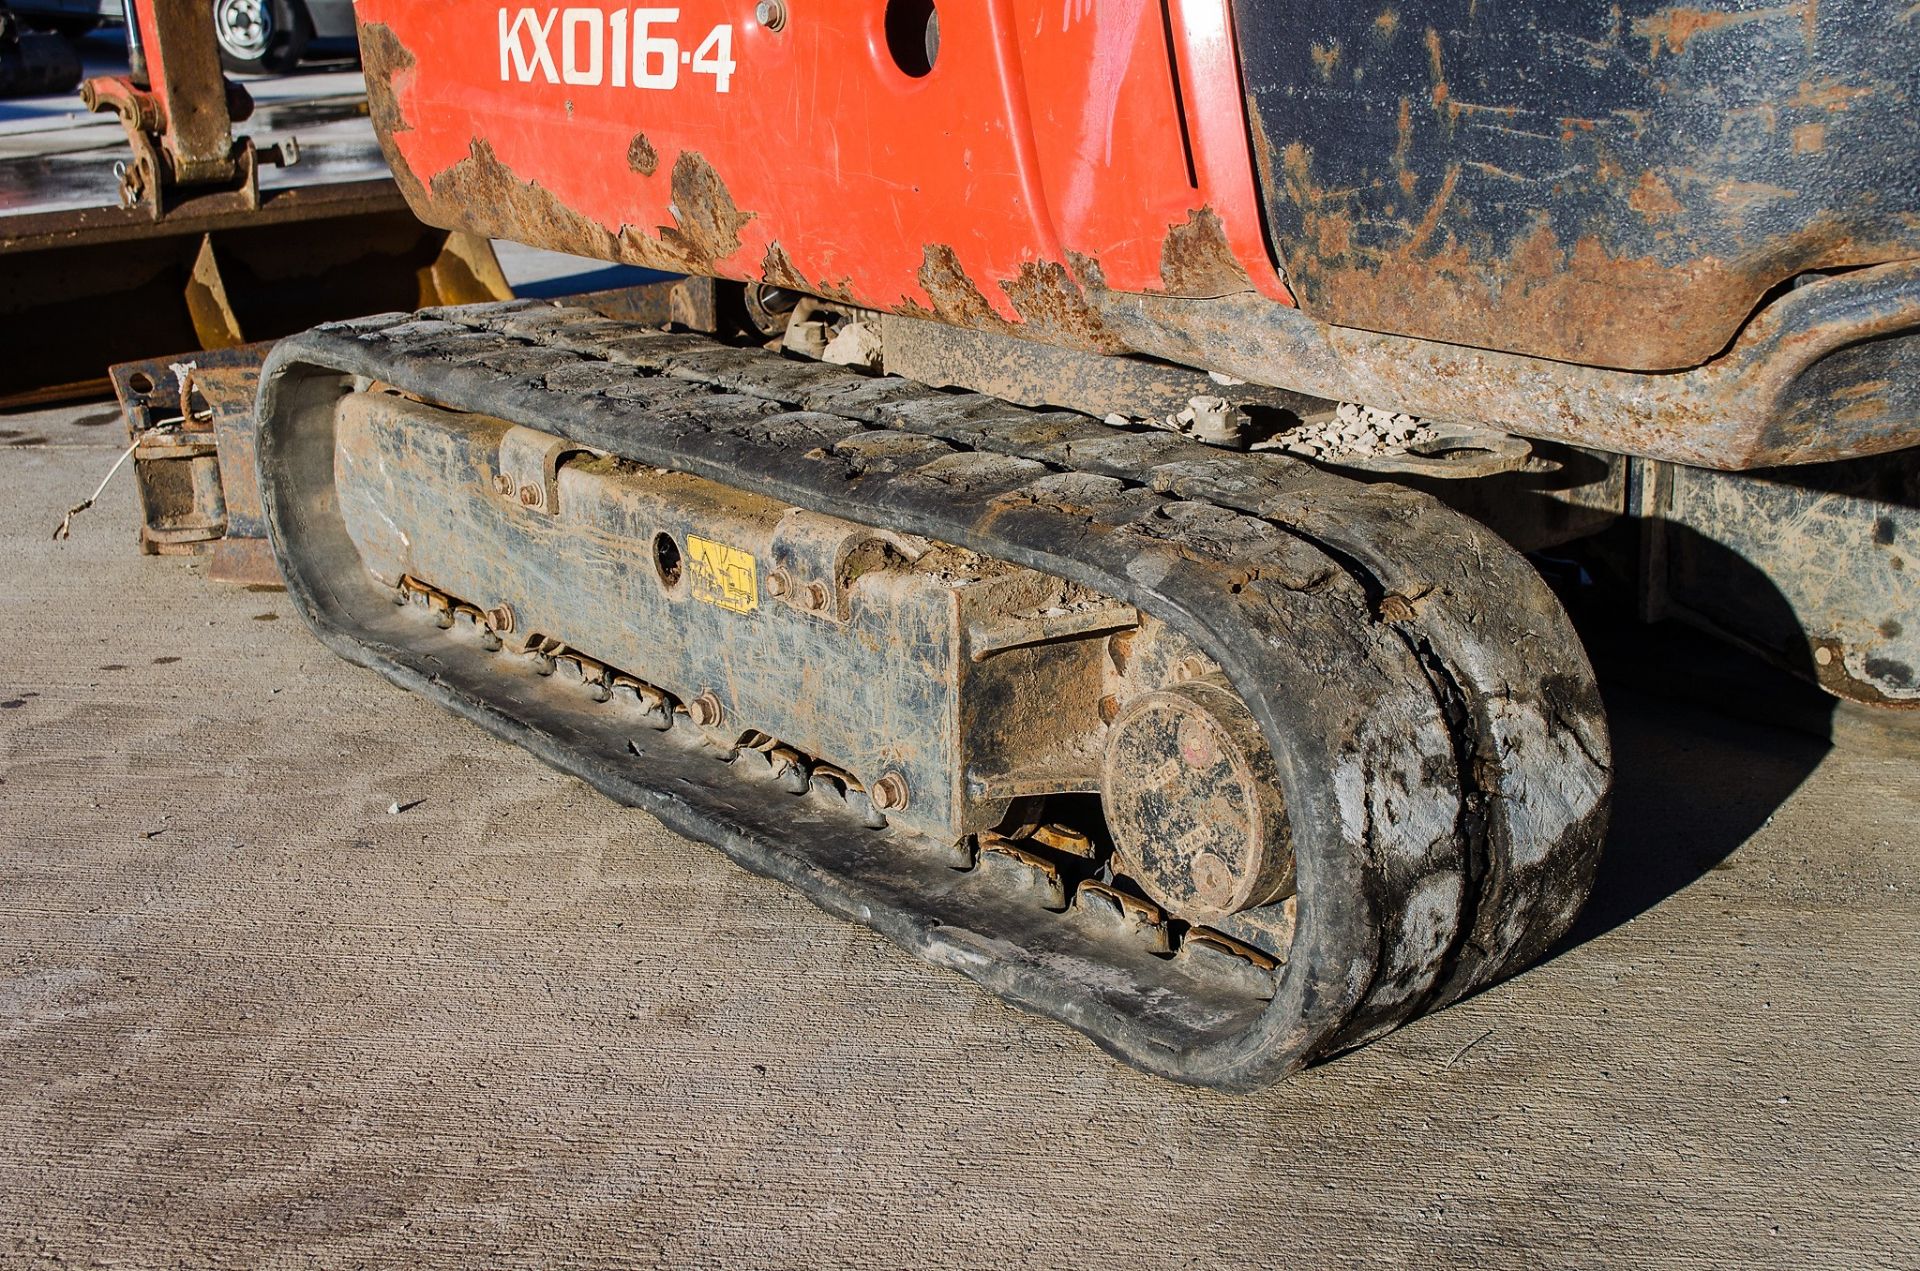 Kubota KX016-4 1.5 tonne rubber tracked mini excavator Year: 2015 S/N: 58688 Recorded Hours: 1736 - Image 9 of 19